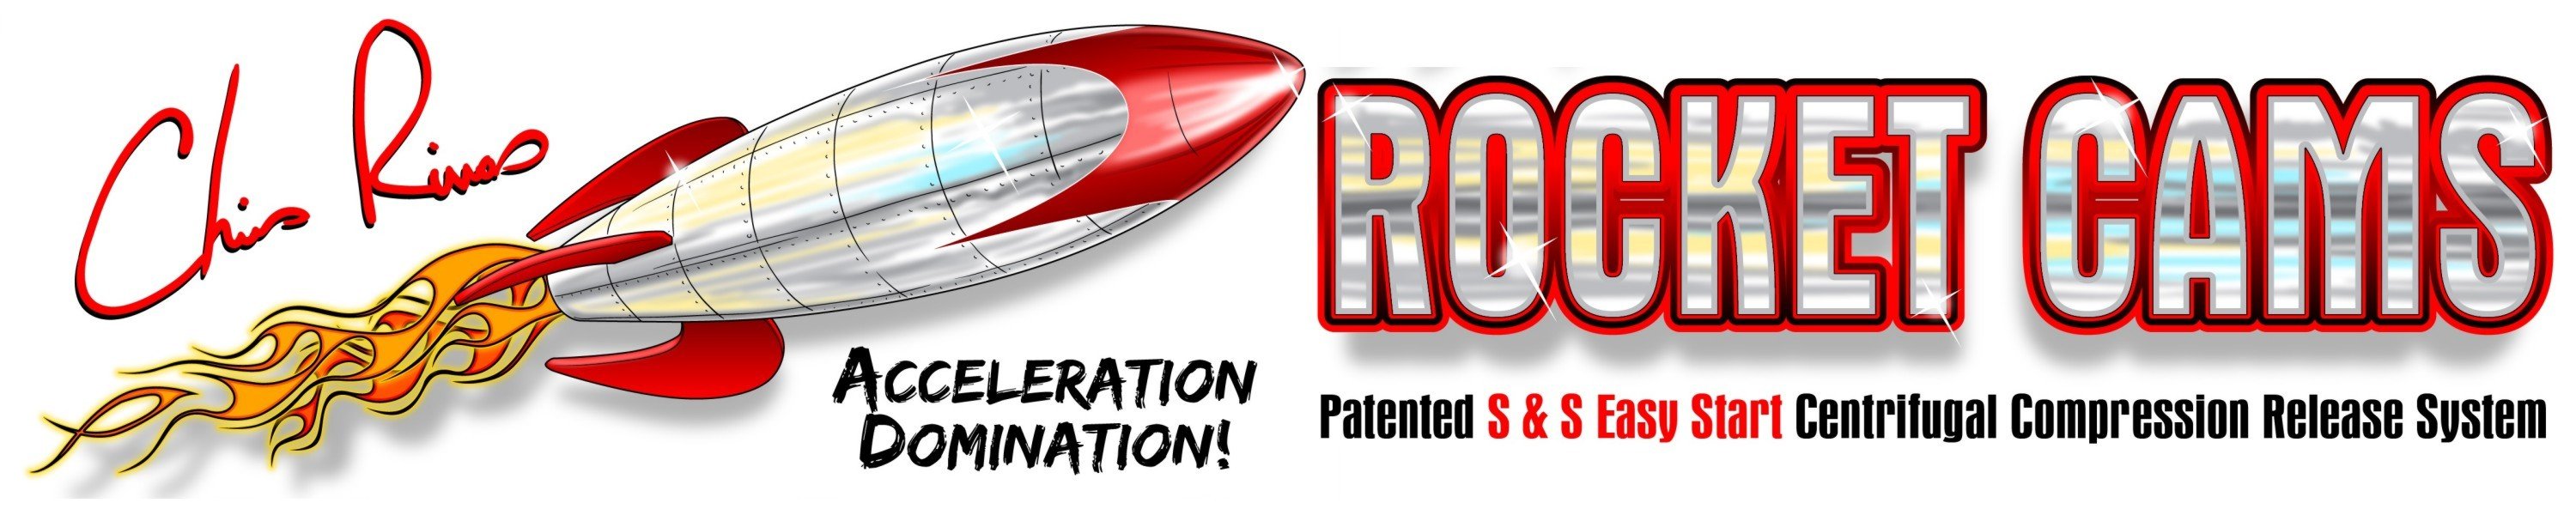 Rocket Cams Inc.